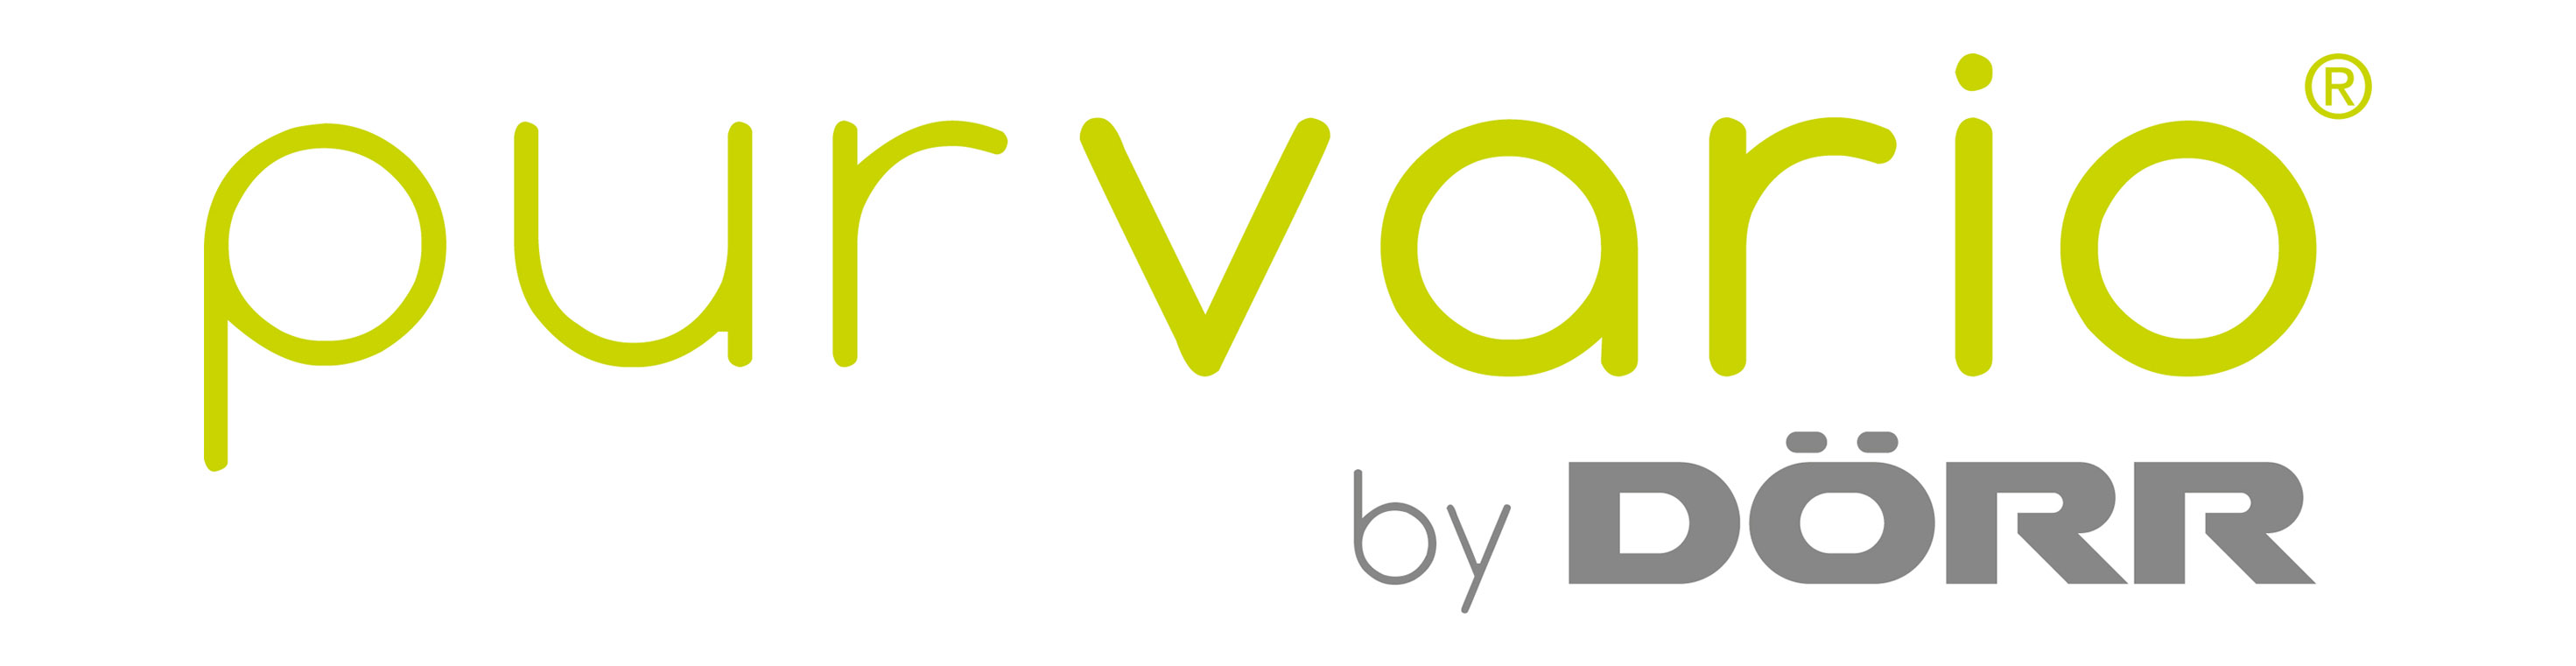 Purvario by DÖRR logo